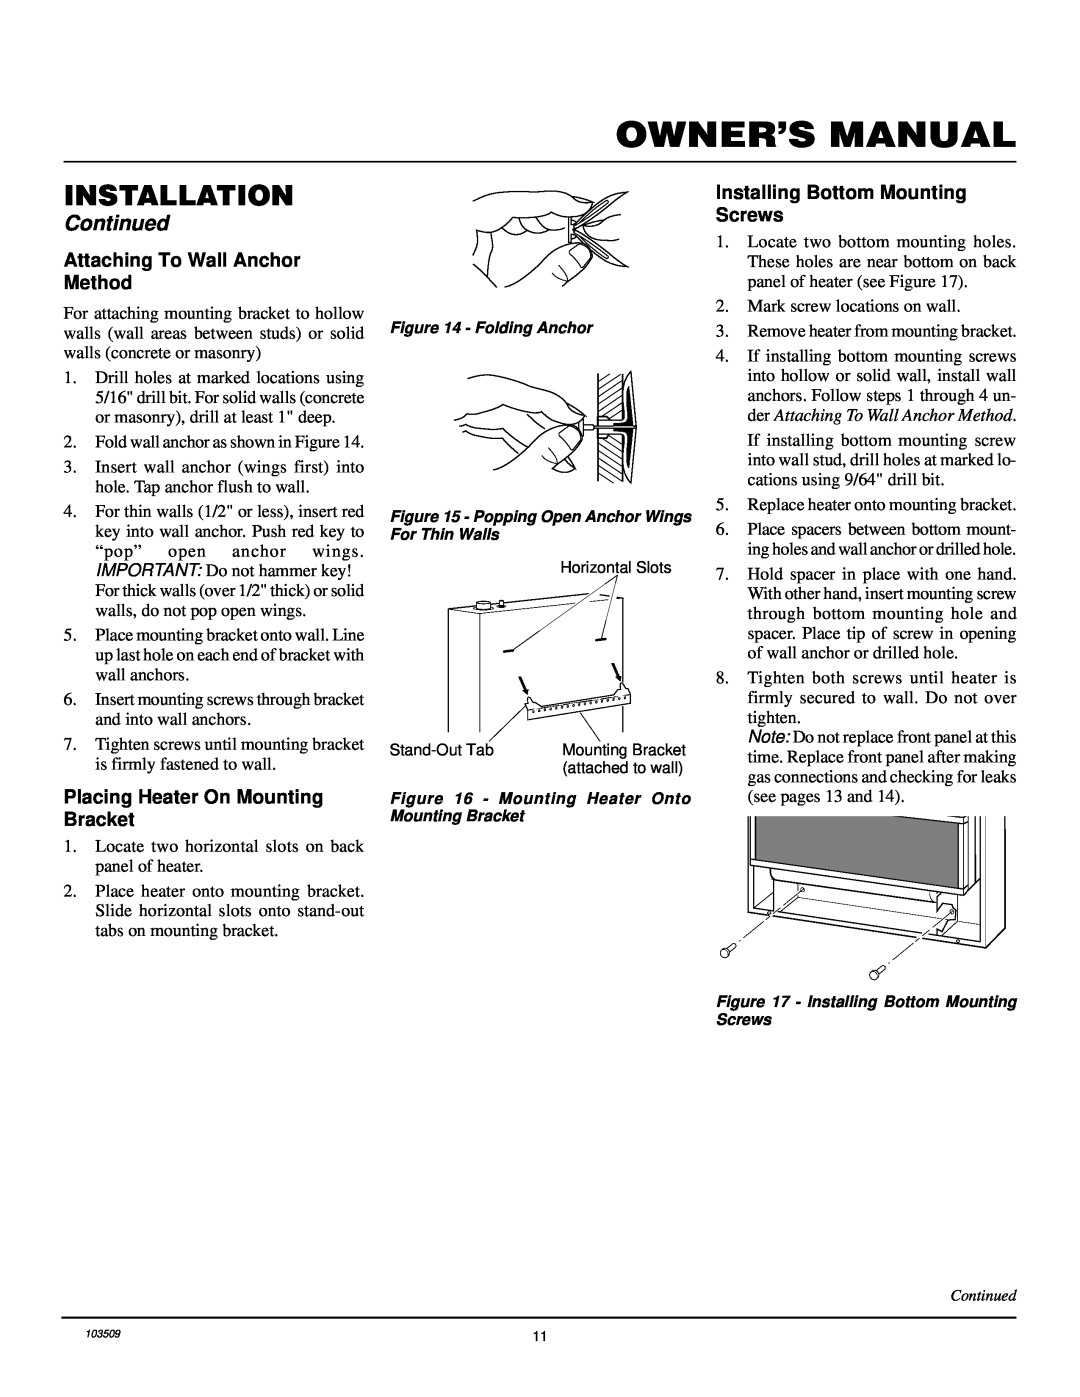 Desa Tech RFP28TC Attaching To Wall Anchor Method, Placing Heater On Mounting Bracket, Installing Bottom Mounting Screws 